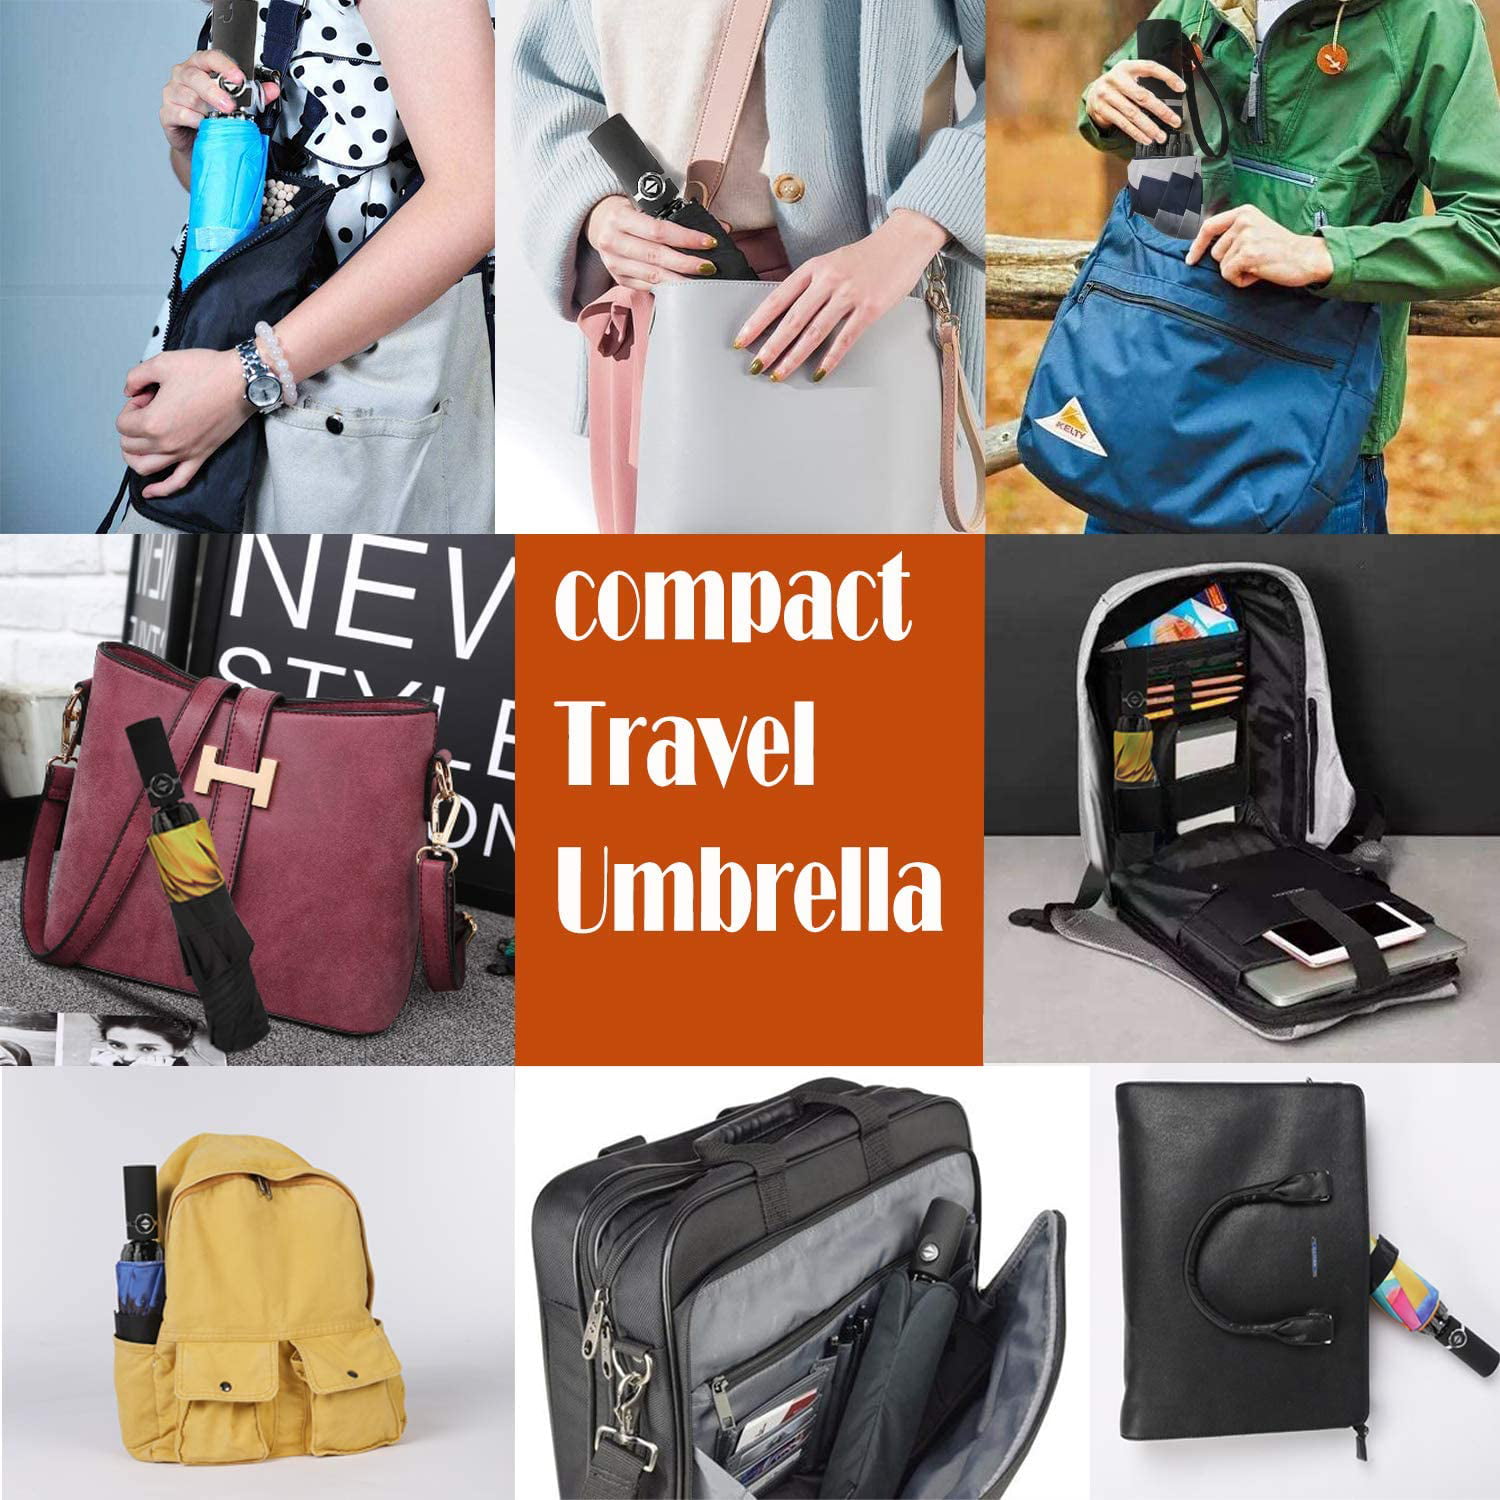 Siepasa Travel Umbrella Umbrella Windproof Compact Folding Reverse Umbrella,-One button for Auto Open and Close 